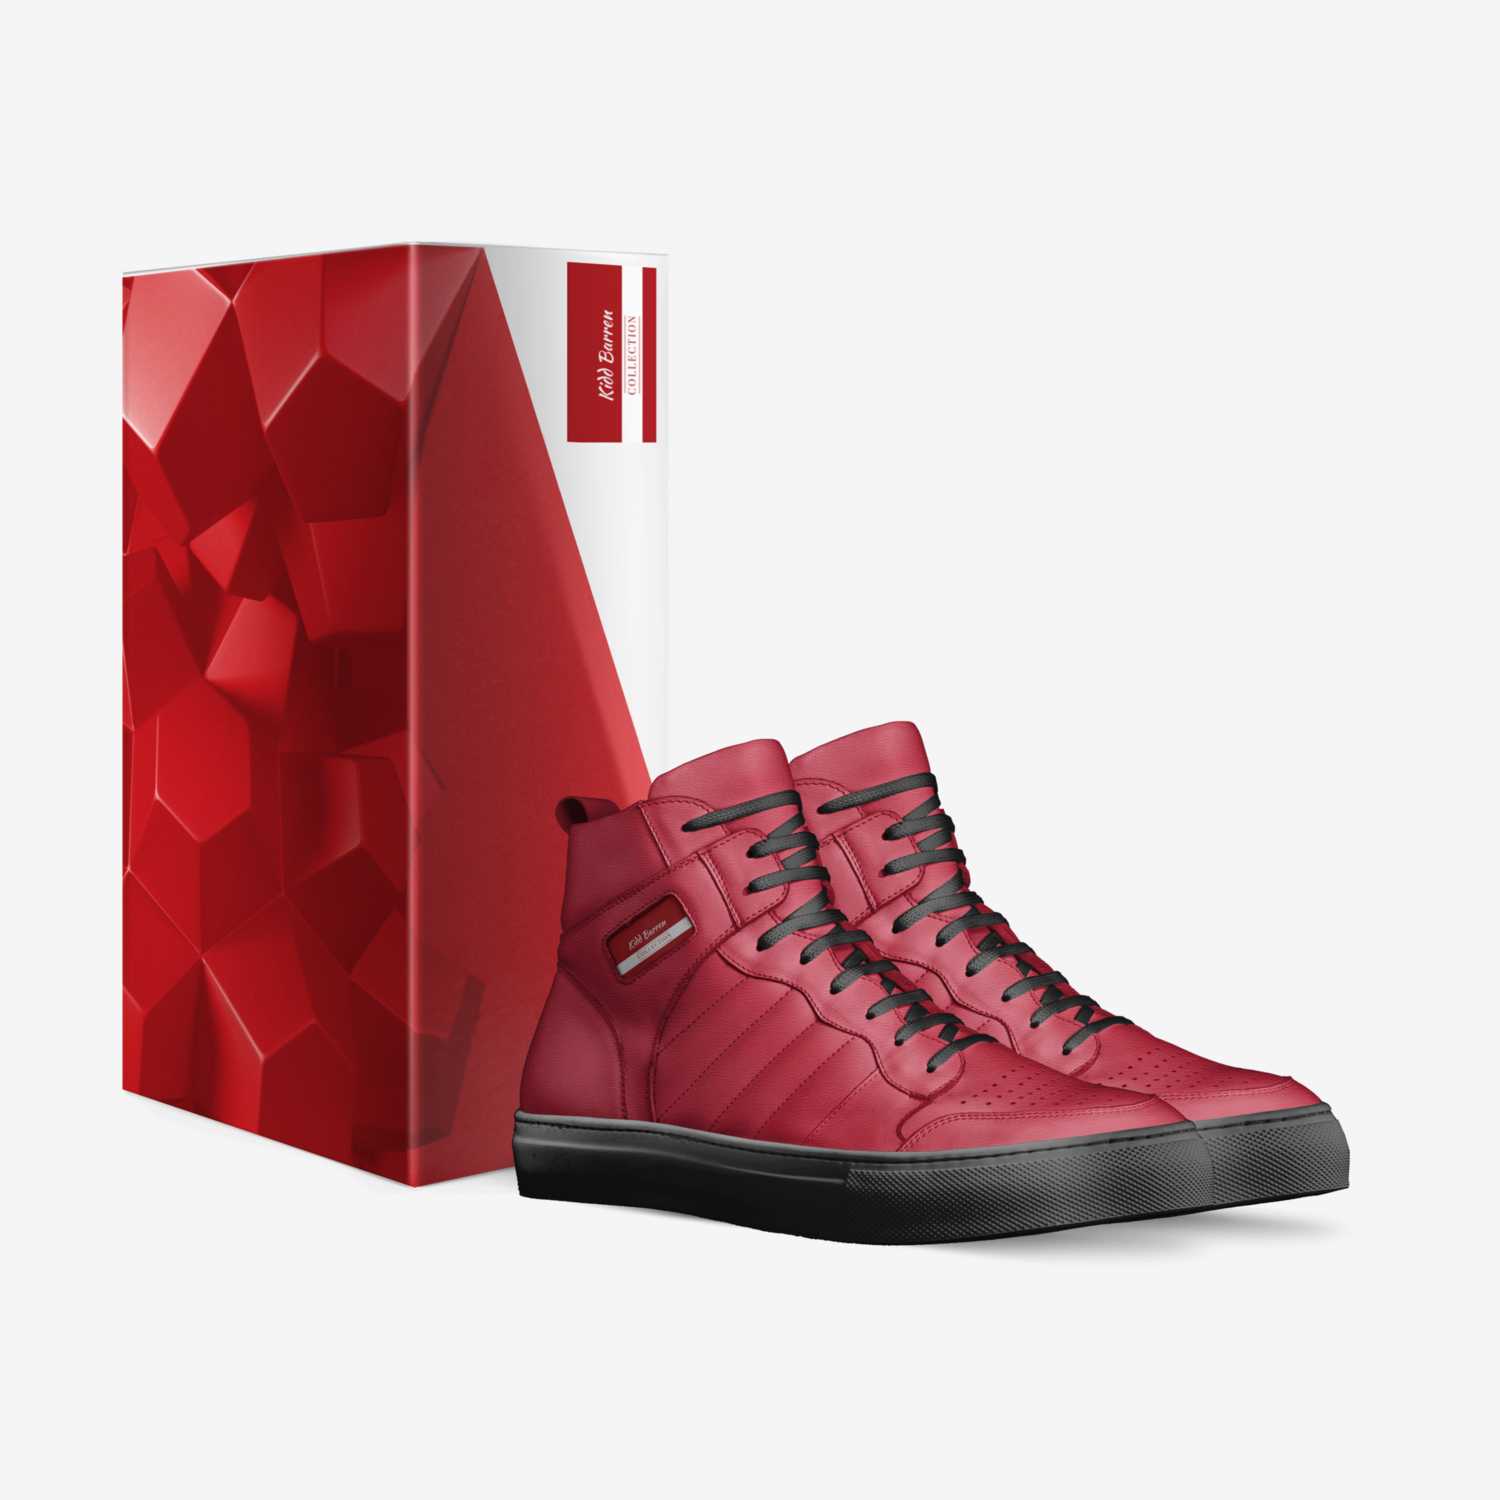 Kidd Barren  custom made in Italy shoes by Matt Barren | Box view